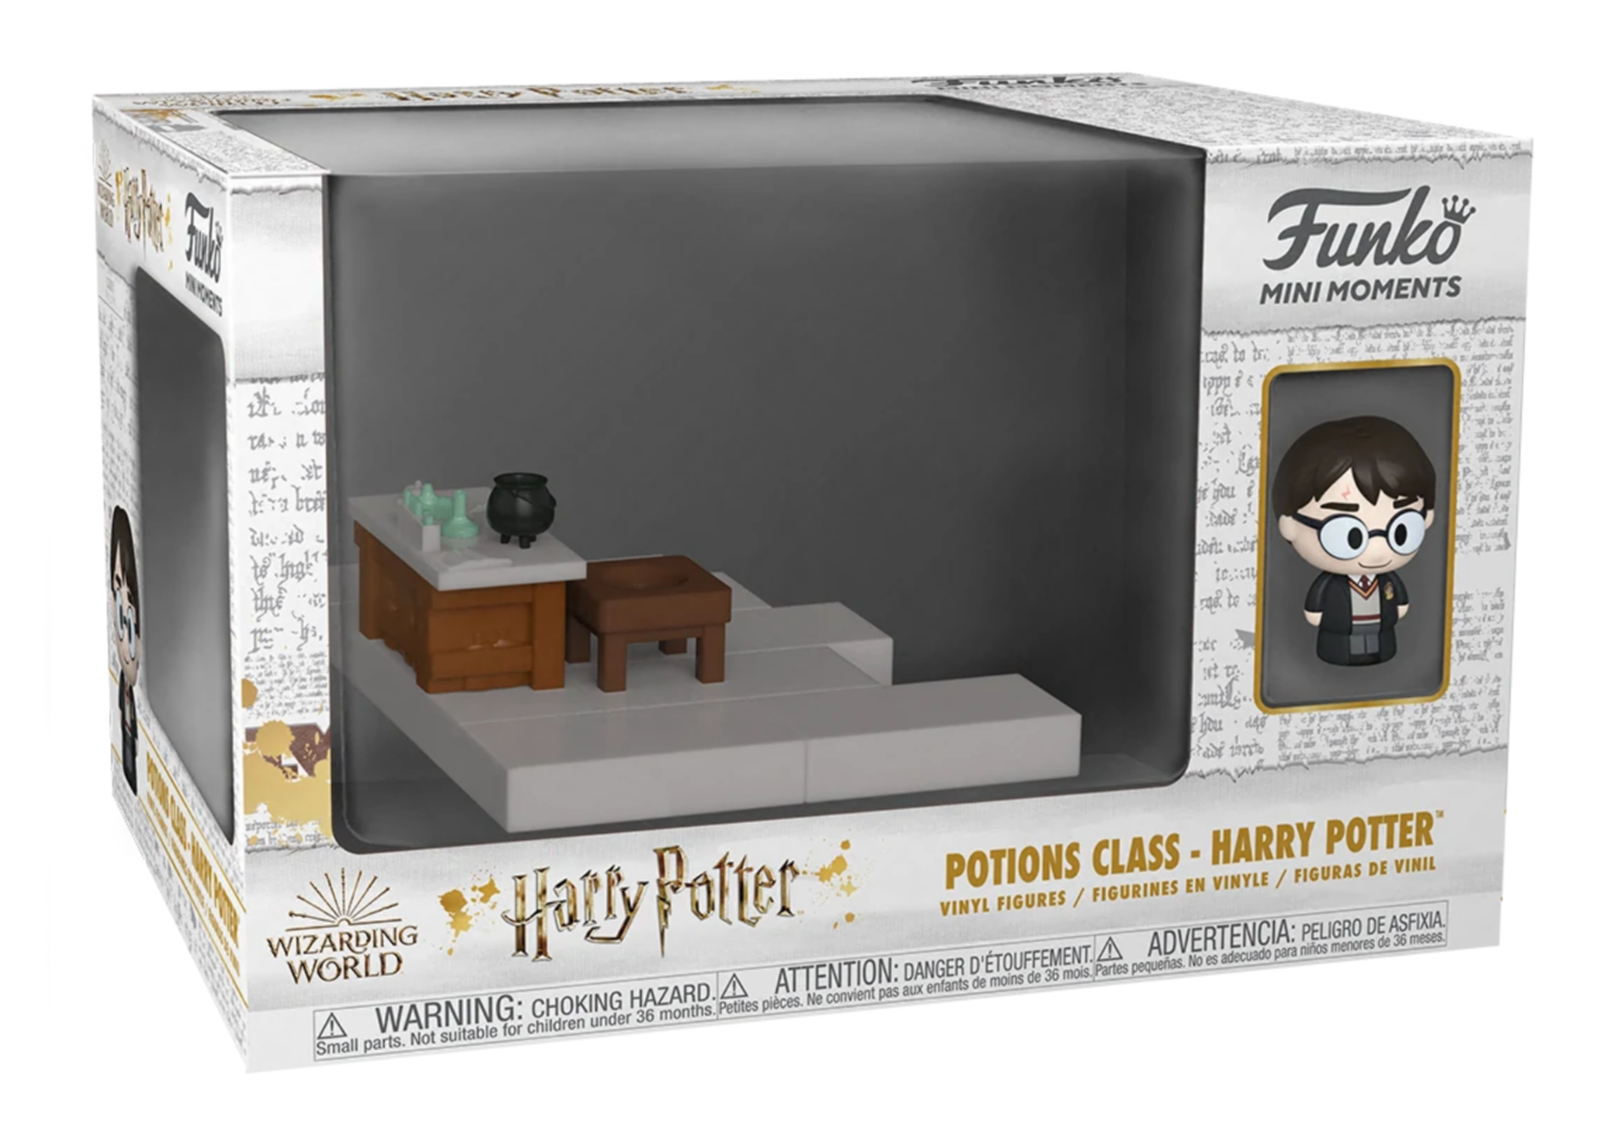 Harry Potter Mini Moments: Potions Class - Harry Potter